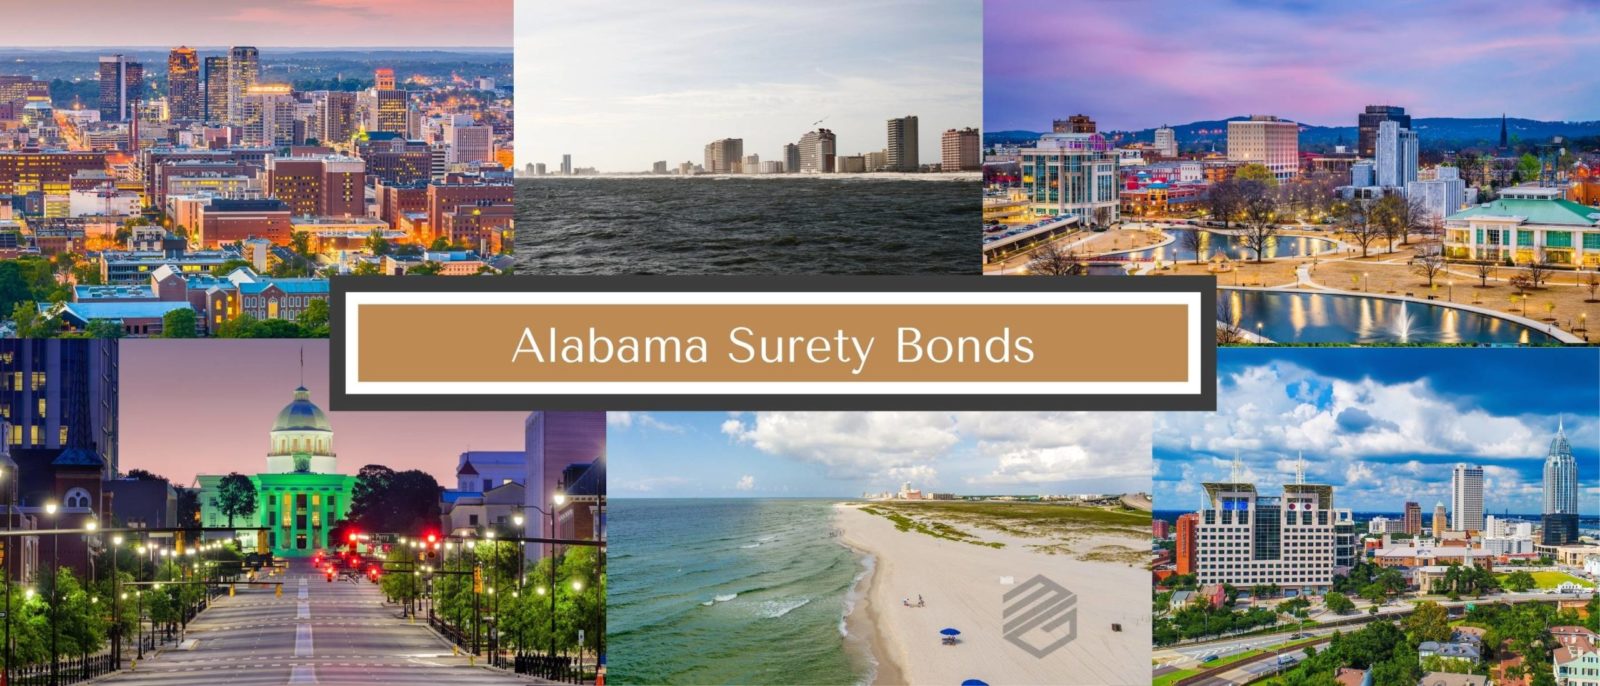 Alabama Surety Bonds - Six pictures representing Alabama including Gulf Shores, Orange Beach, Huntsville, Birmingham and Mobile. Text box that says, "Alabama Surety Bonds".